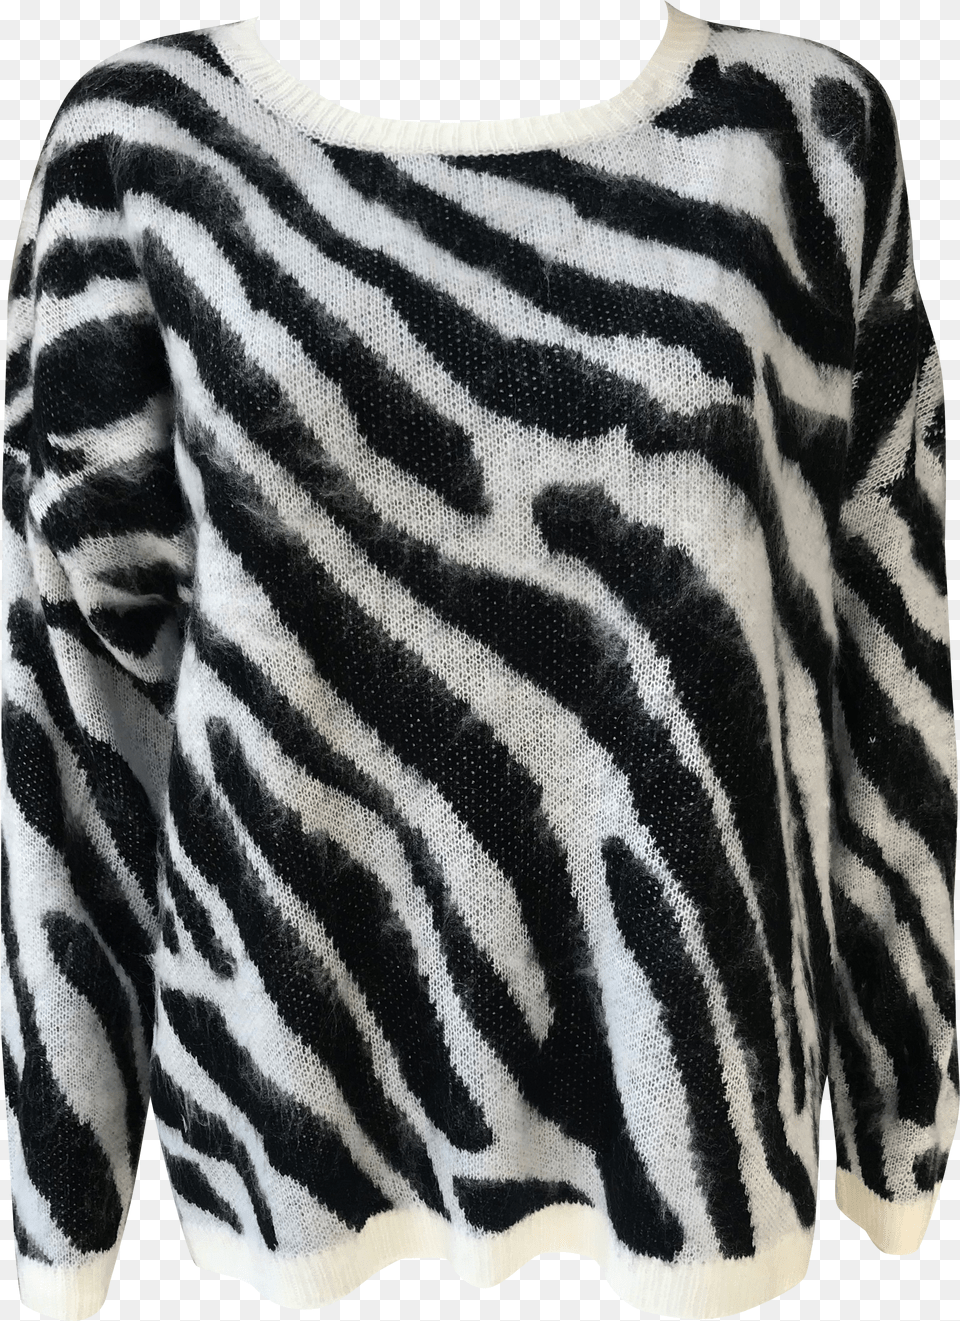 Zebra Jumper Download Sweater Png